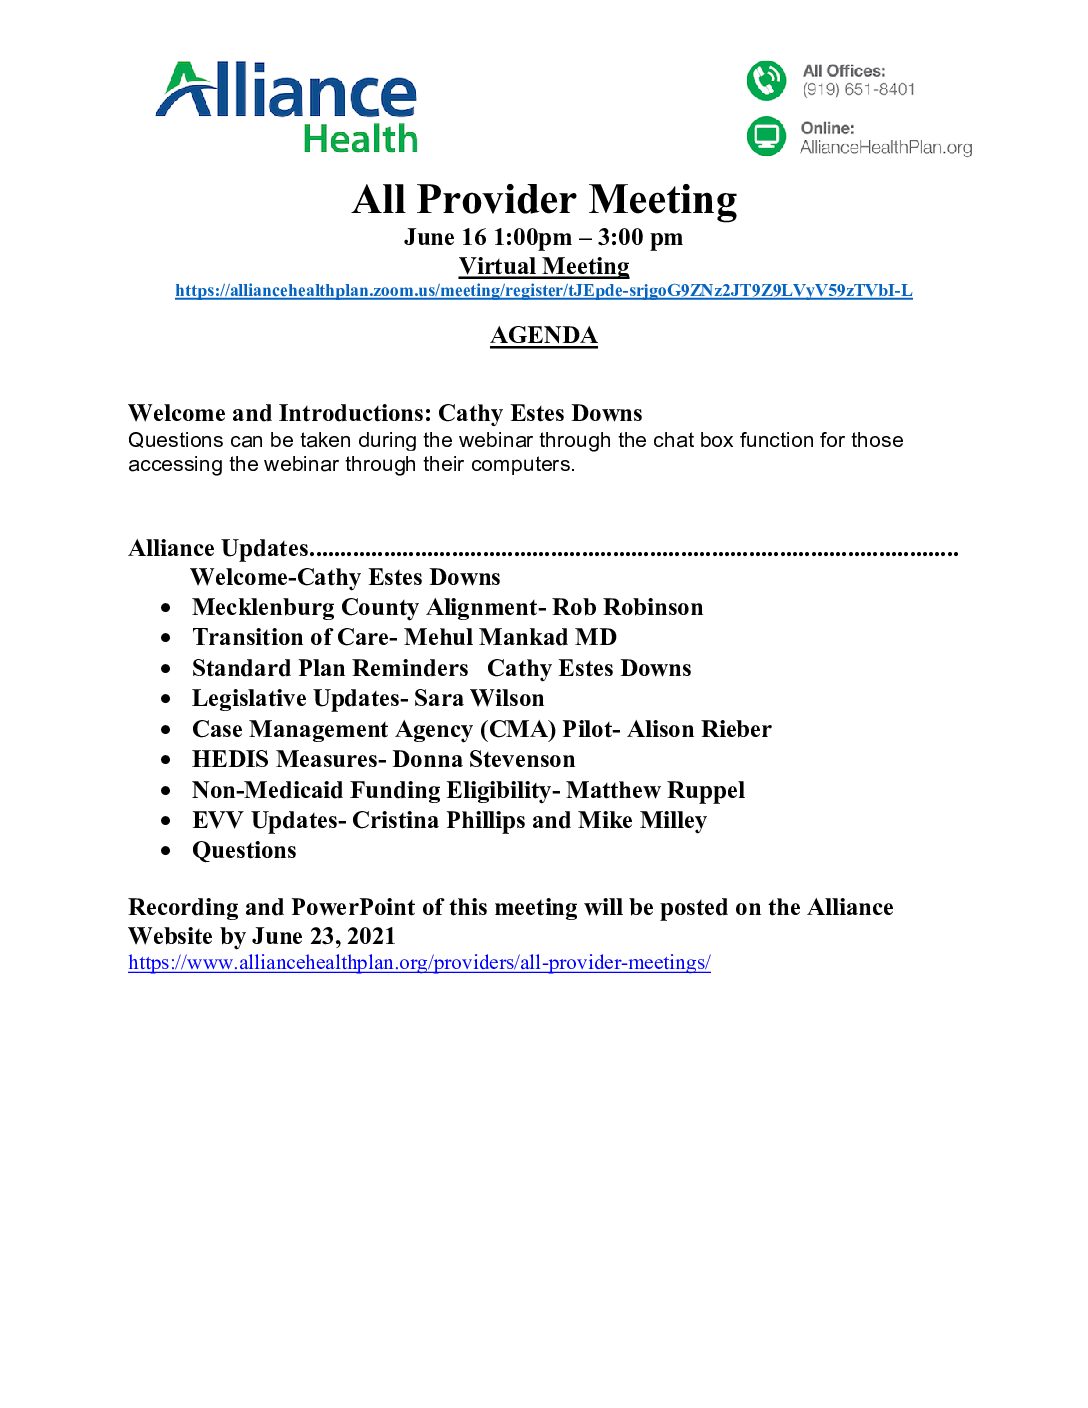 All Provider Meeting Agenda June 2021